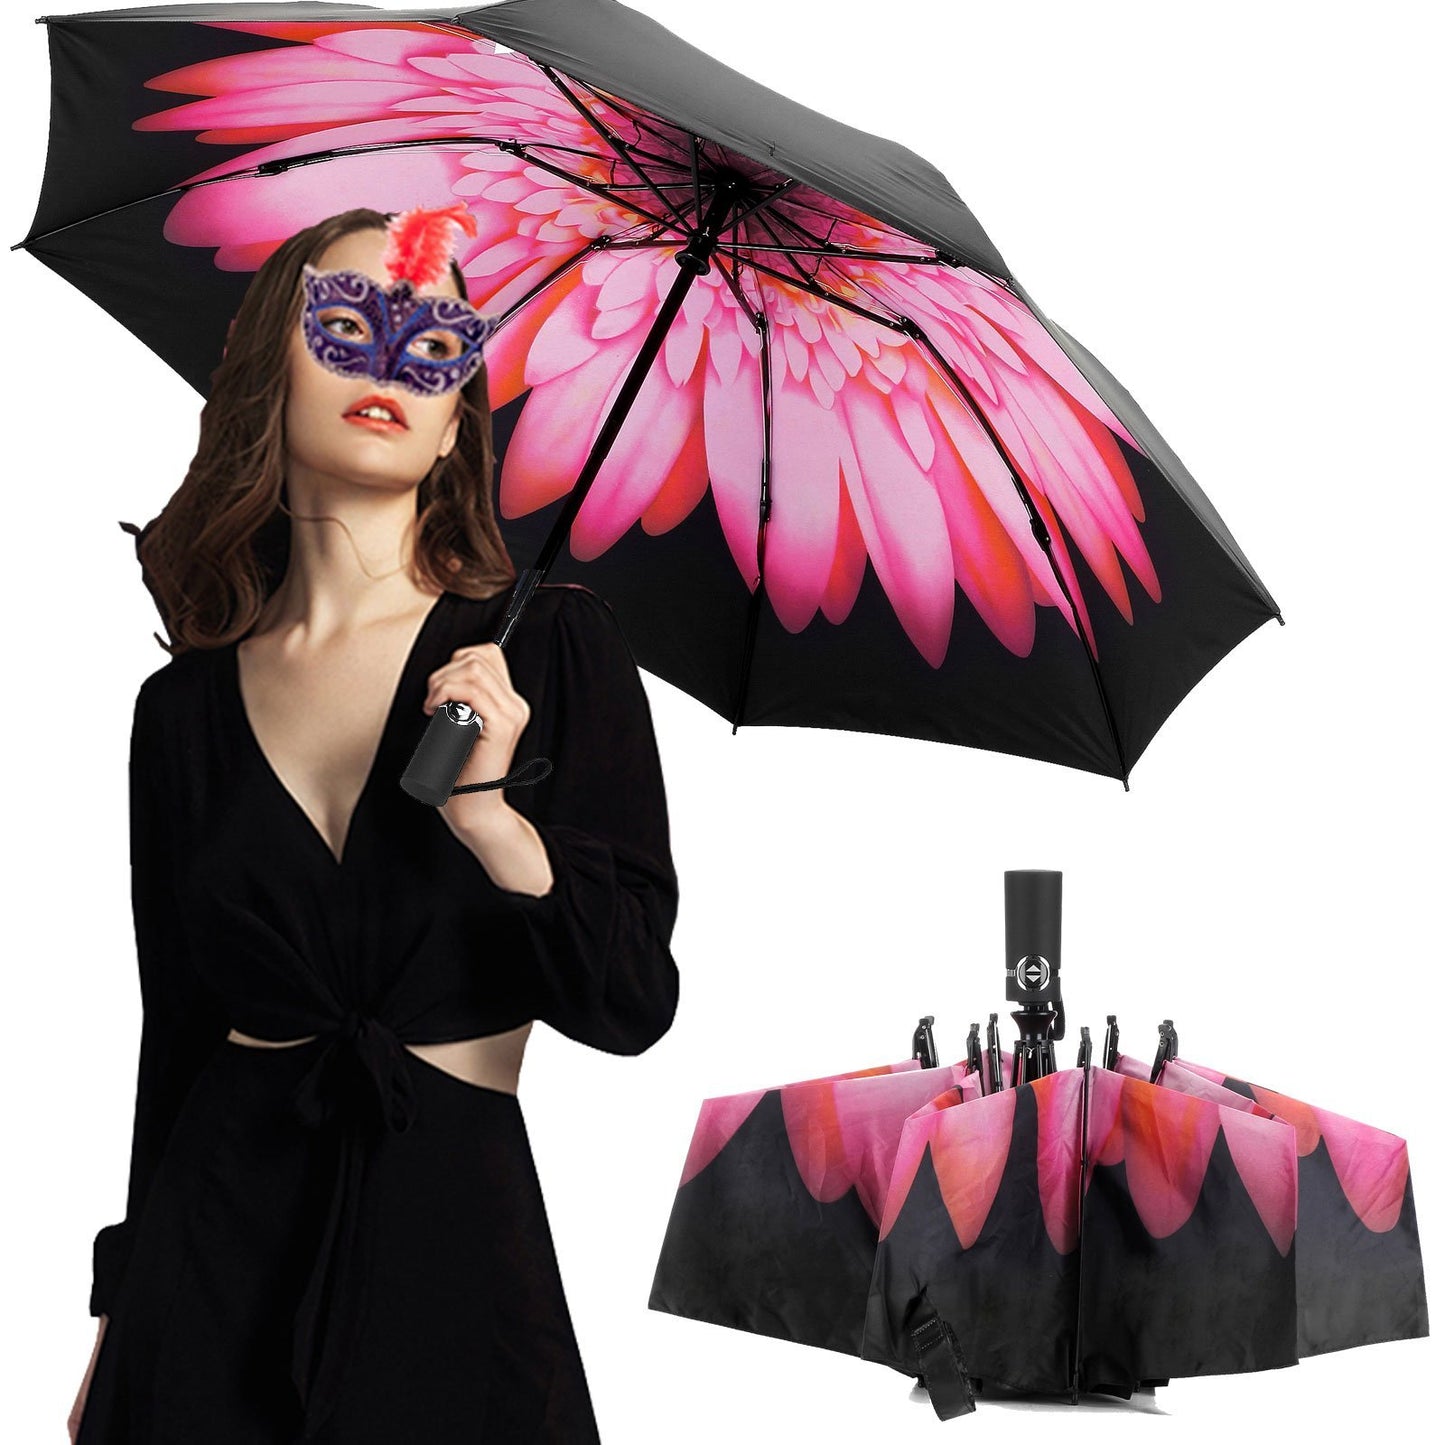 LANBRELLA Umbrella Inverted Travel Umbrellas Windproof Compact Folding - Pink Flower